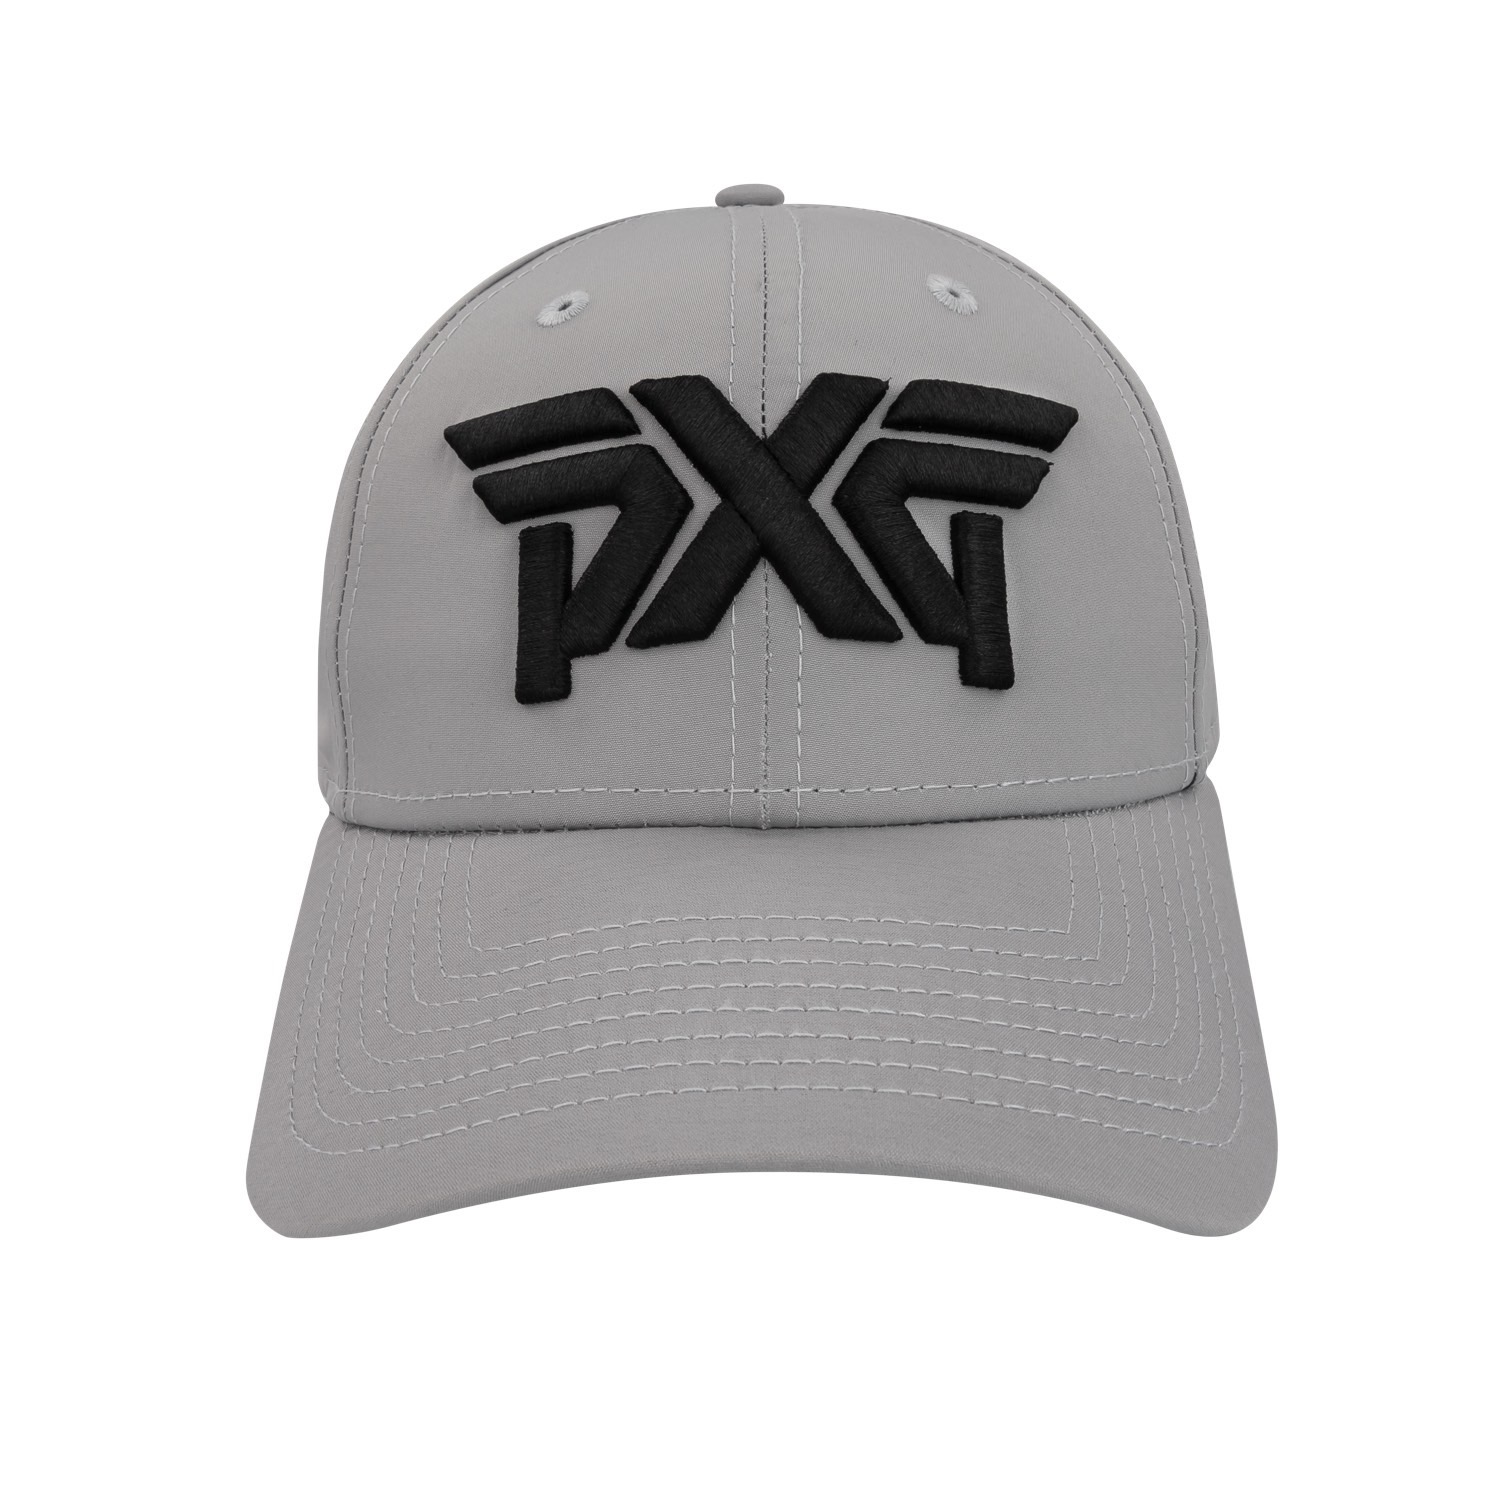 PXG Prolight Collection 920W Adjustable Baseball Cap Medium Grey